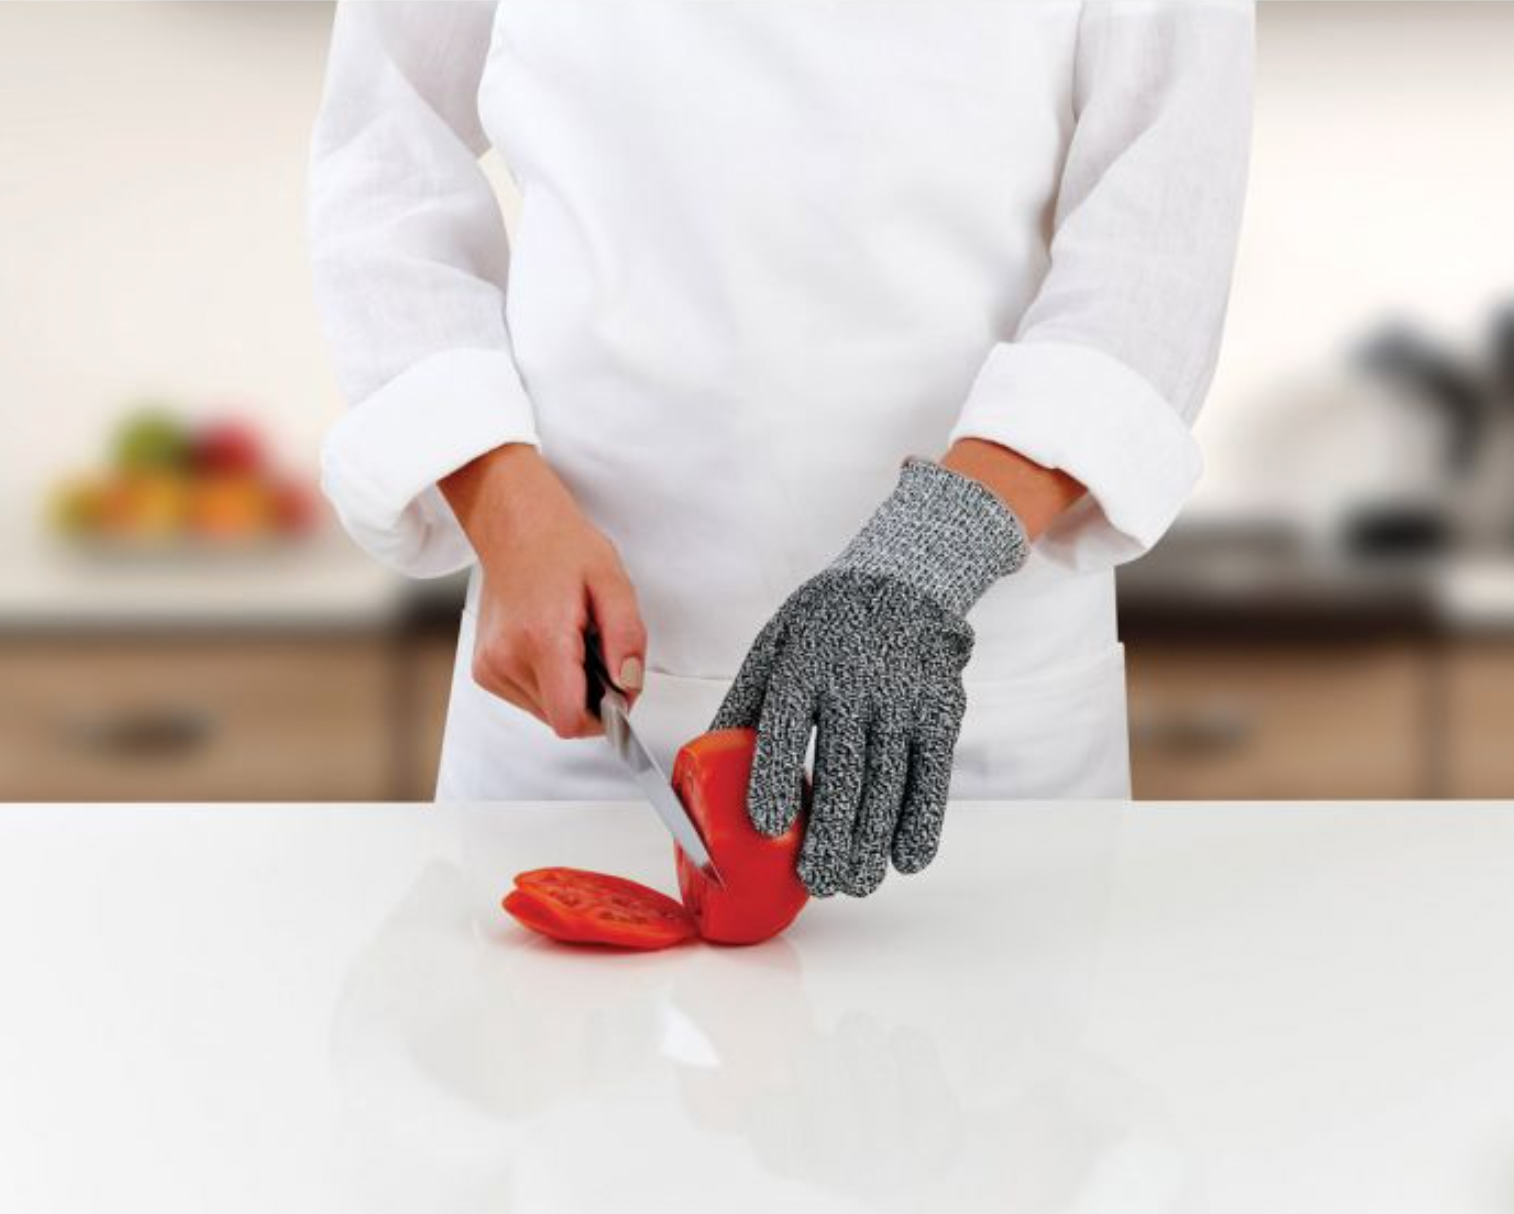 Cutlery Pro Mesh Cutting Gloves – Medium